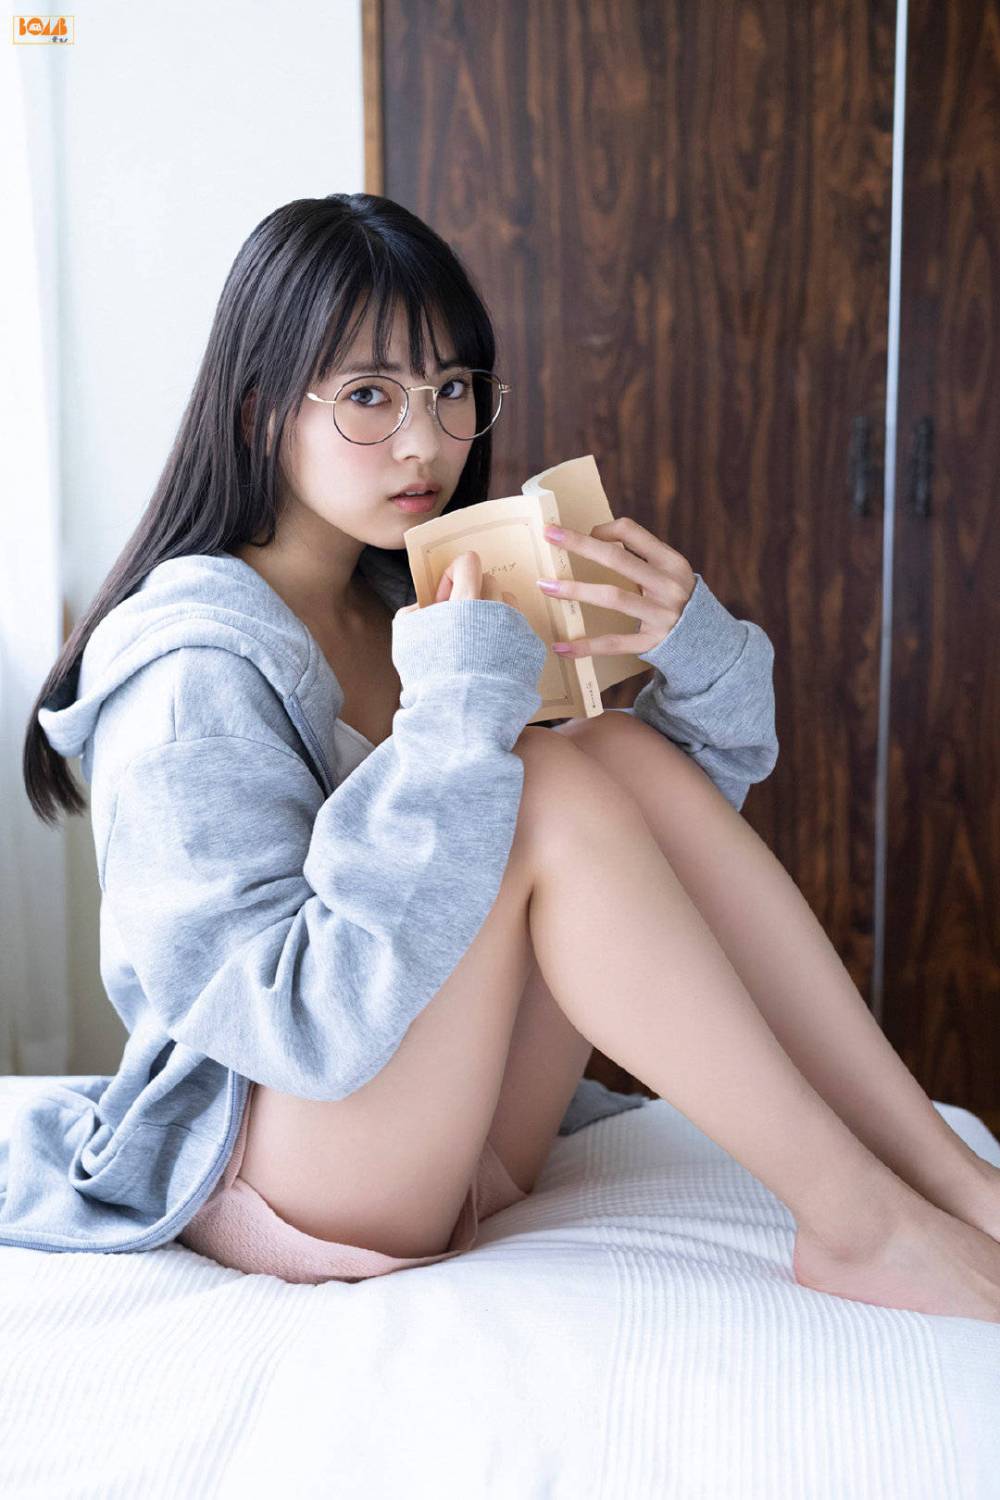 Yume Shinjo Sexy and Hottest Photos , Latest Pics